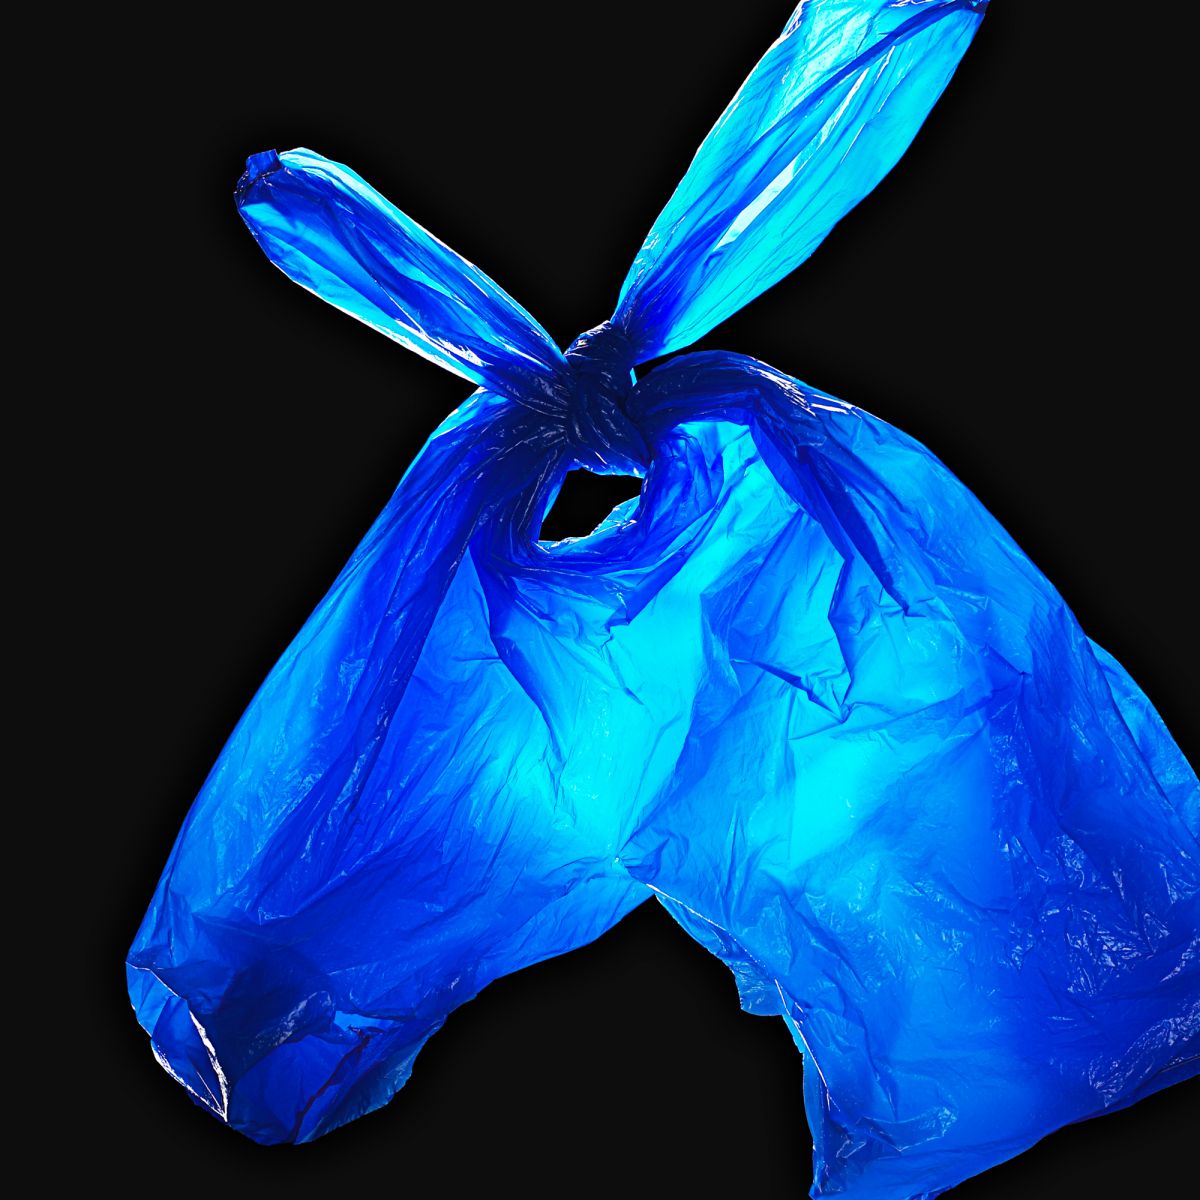 Donkey Bag. By Dennis Pedersen, Still Life Photographer, London